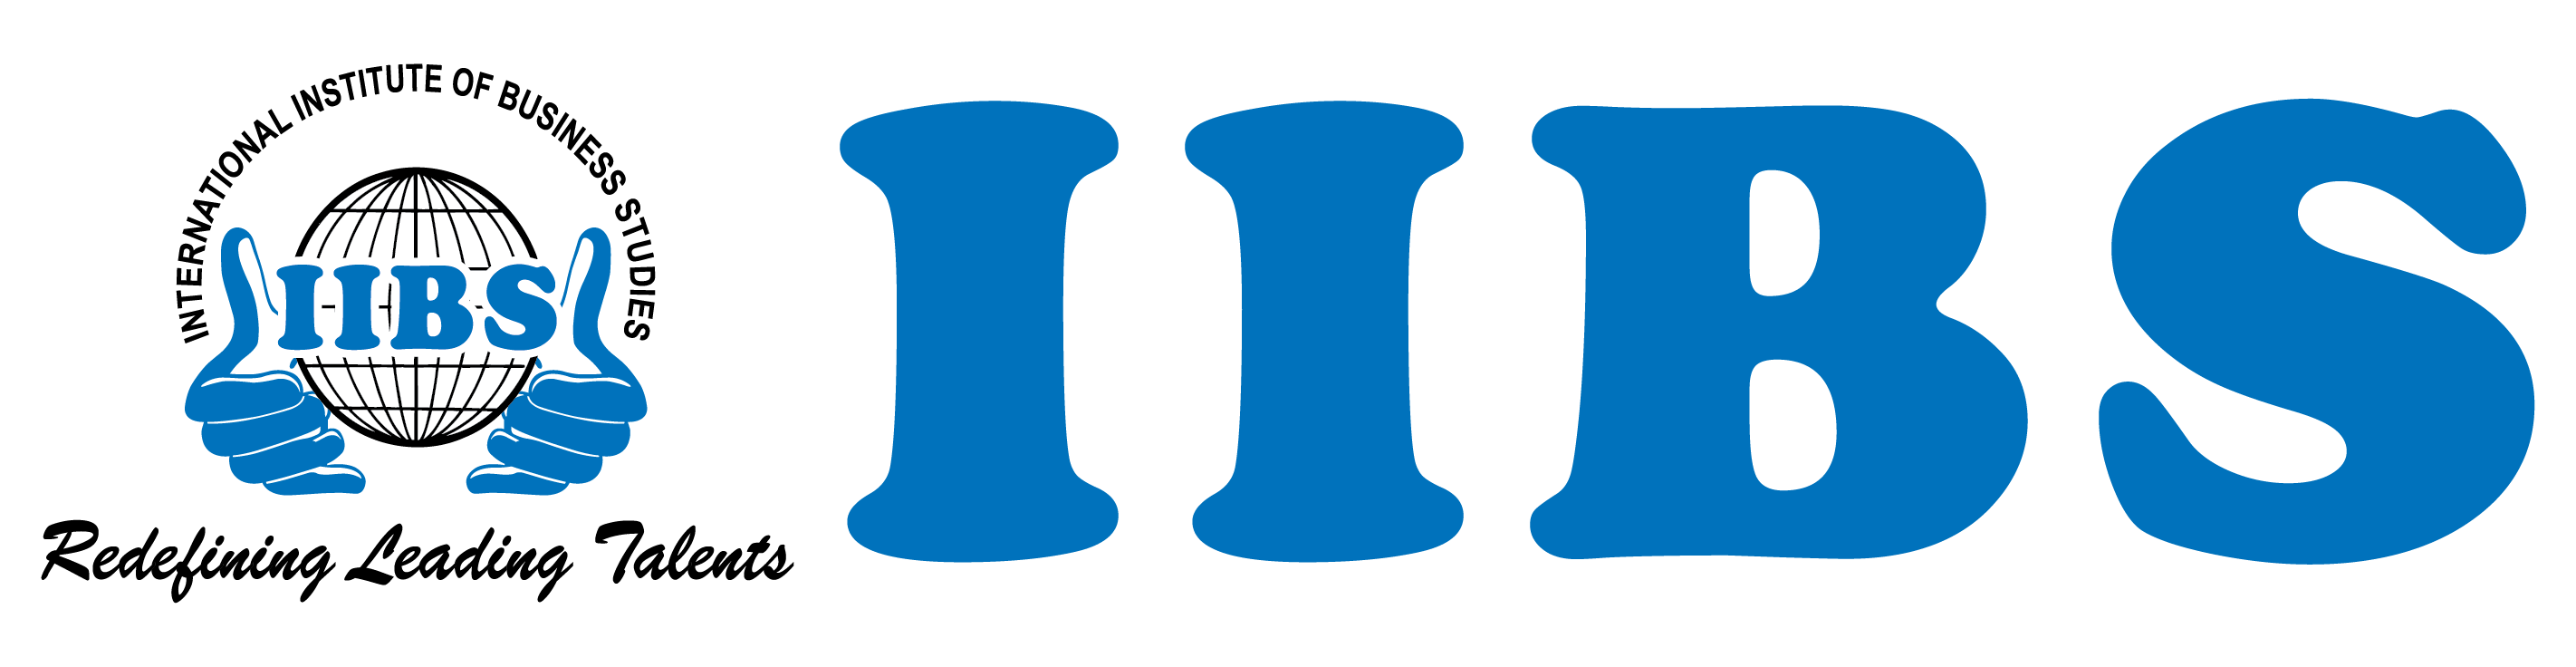 International Institute of Business Studies Logo